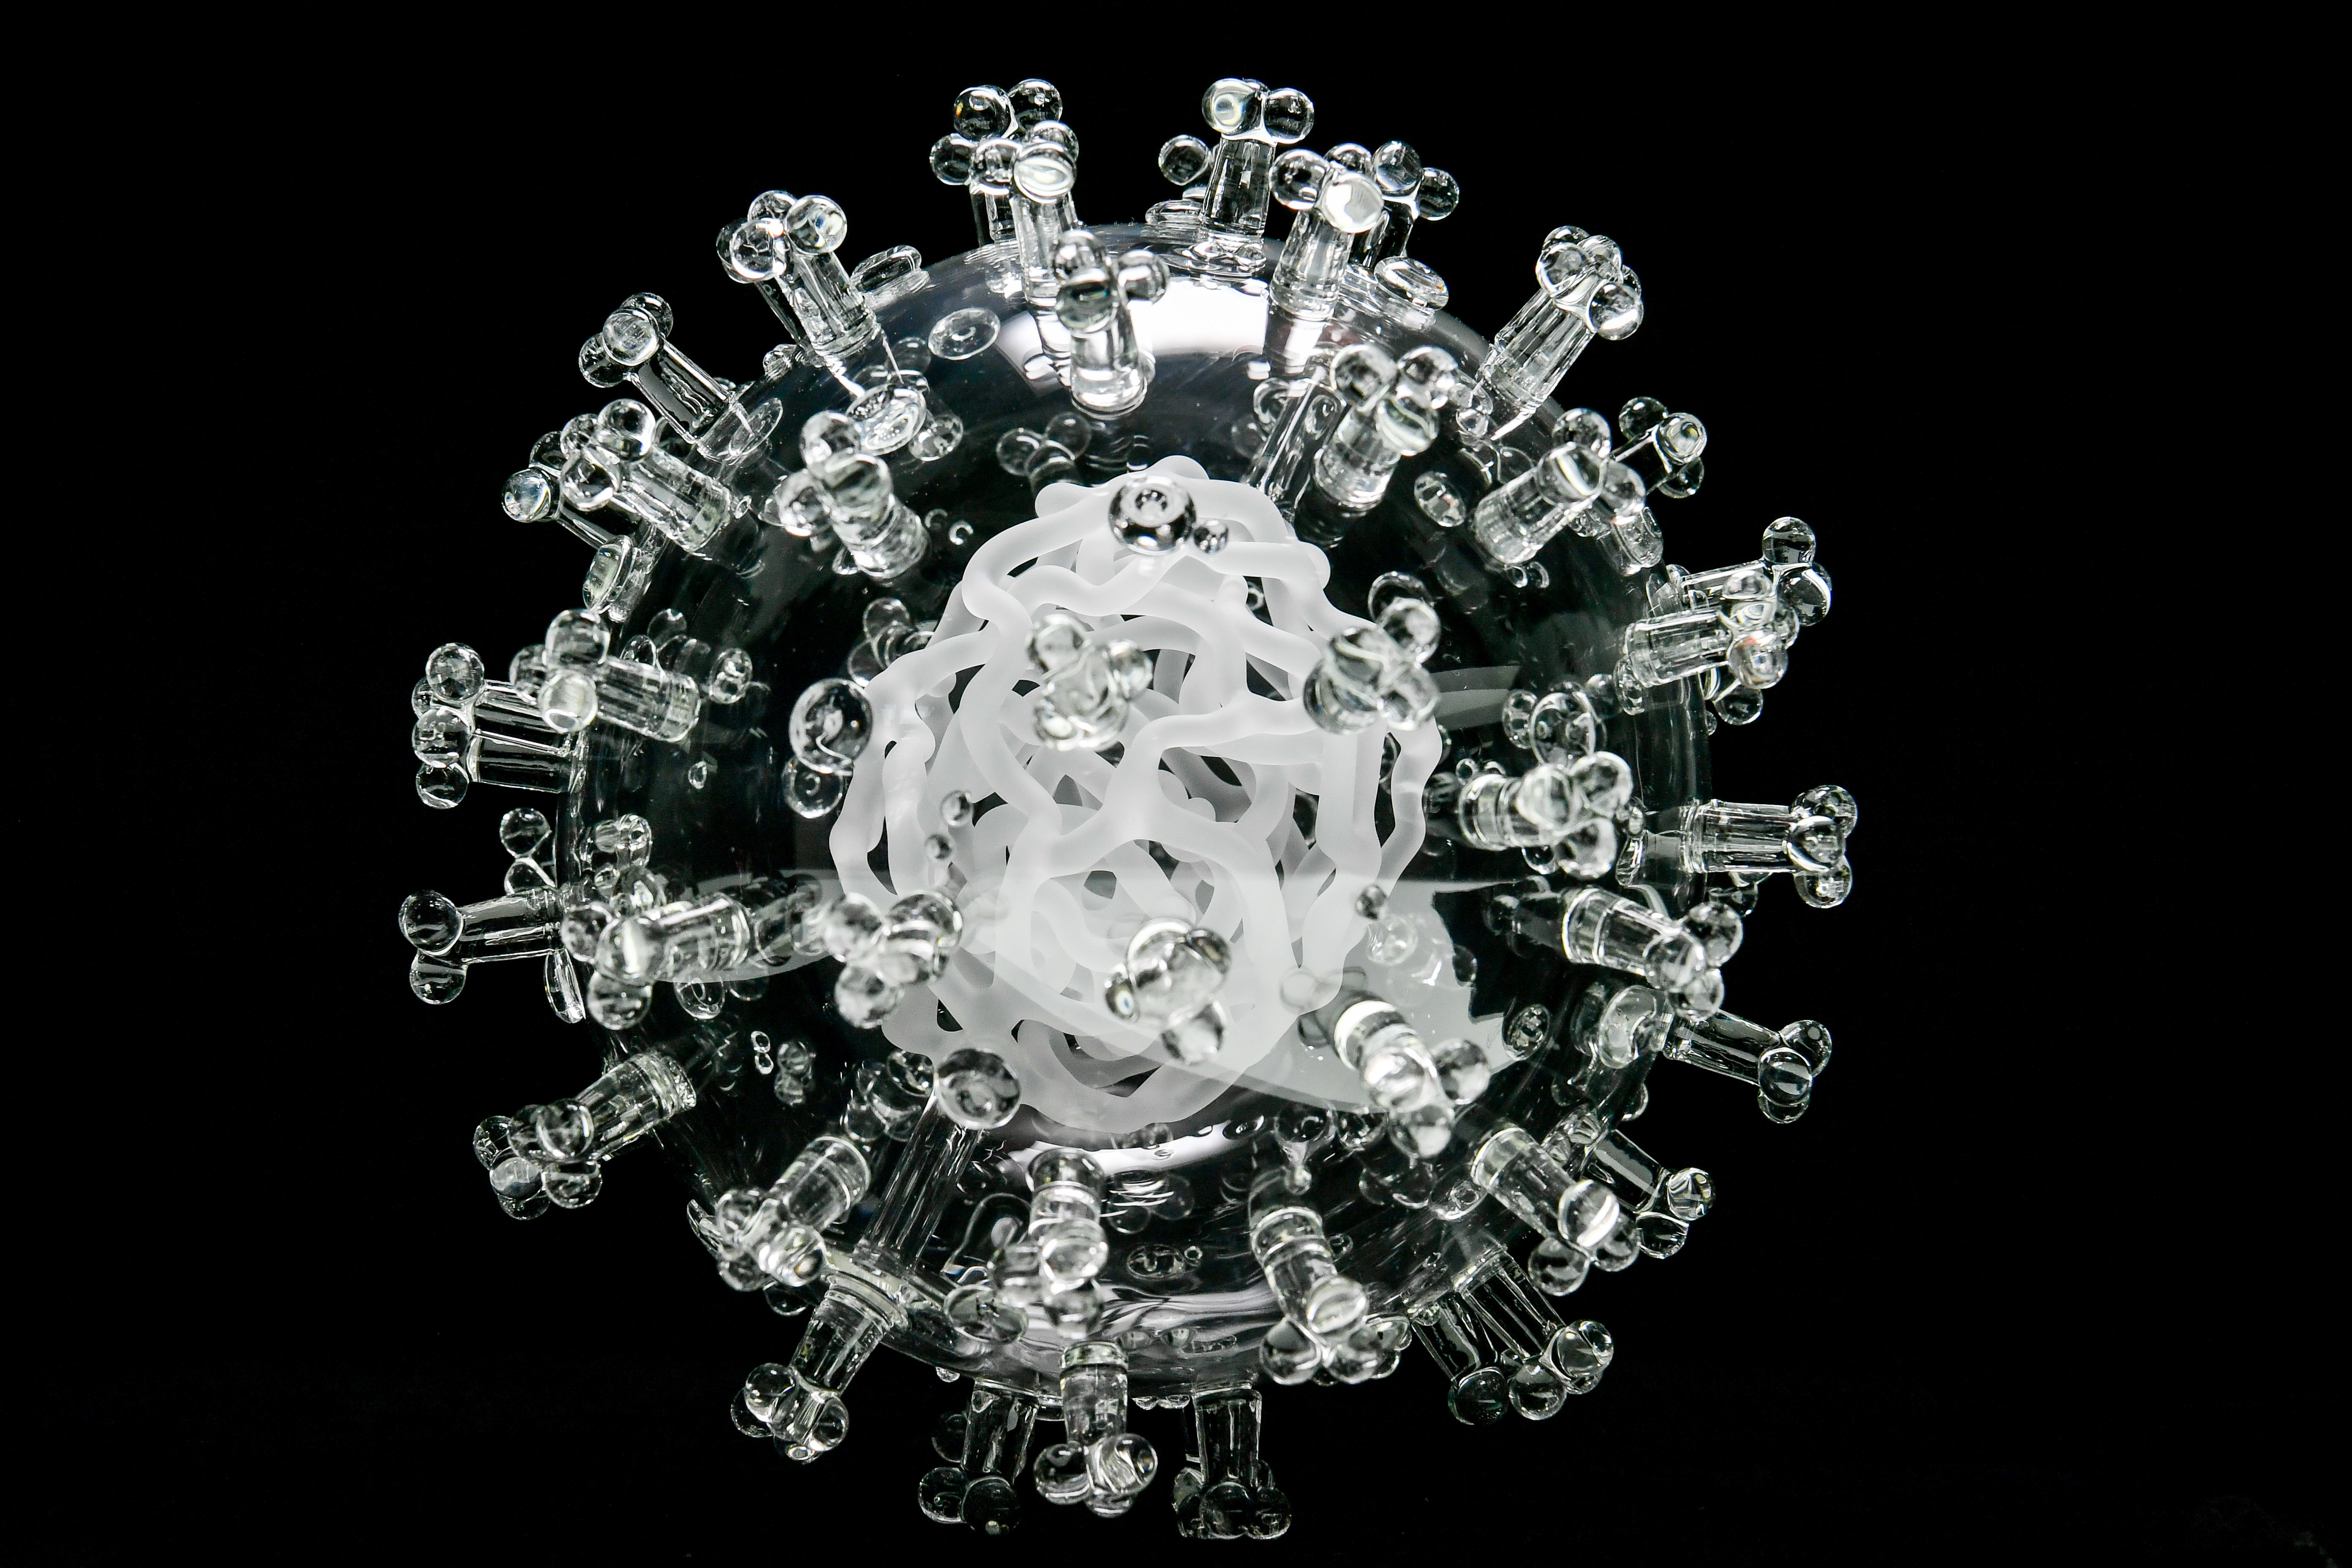 Surgical, cotton masks found ineffective in filtering coronavirus